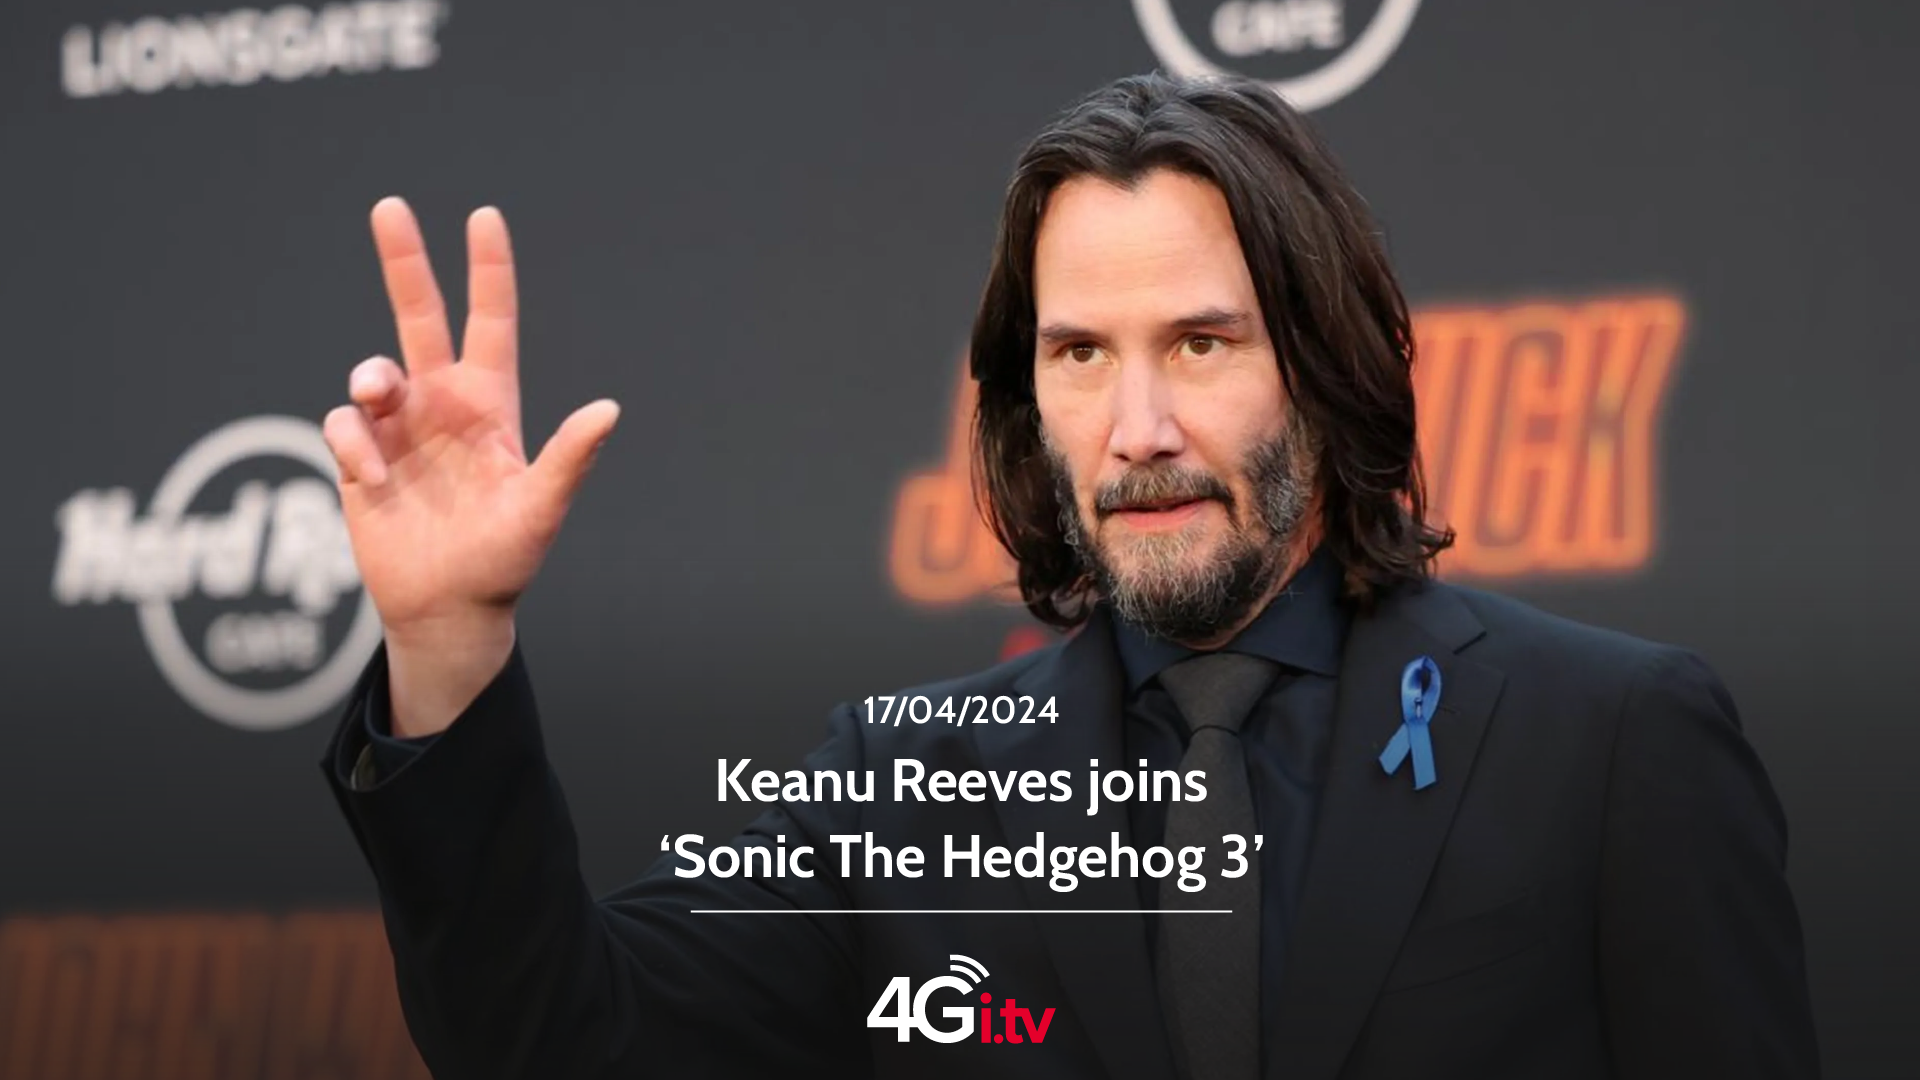 Lesen Sie mehr über den Artikel Keanu Reeves joins ‘Sonic The Hedgehog 3’